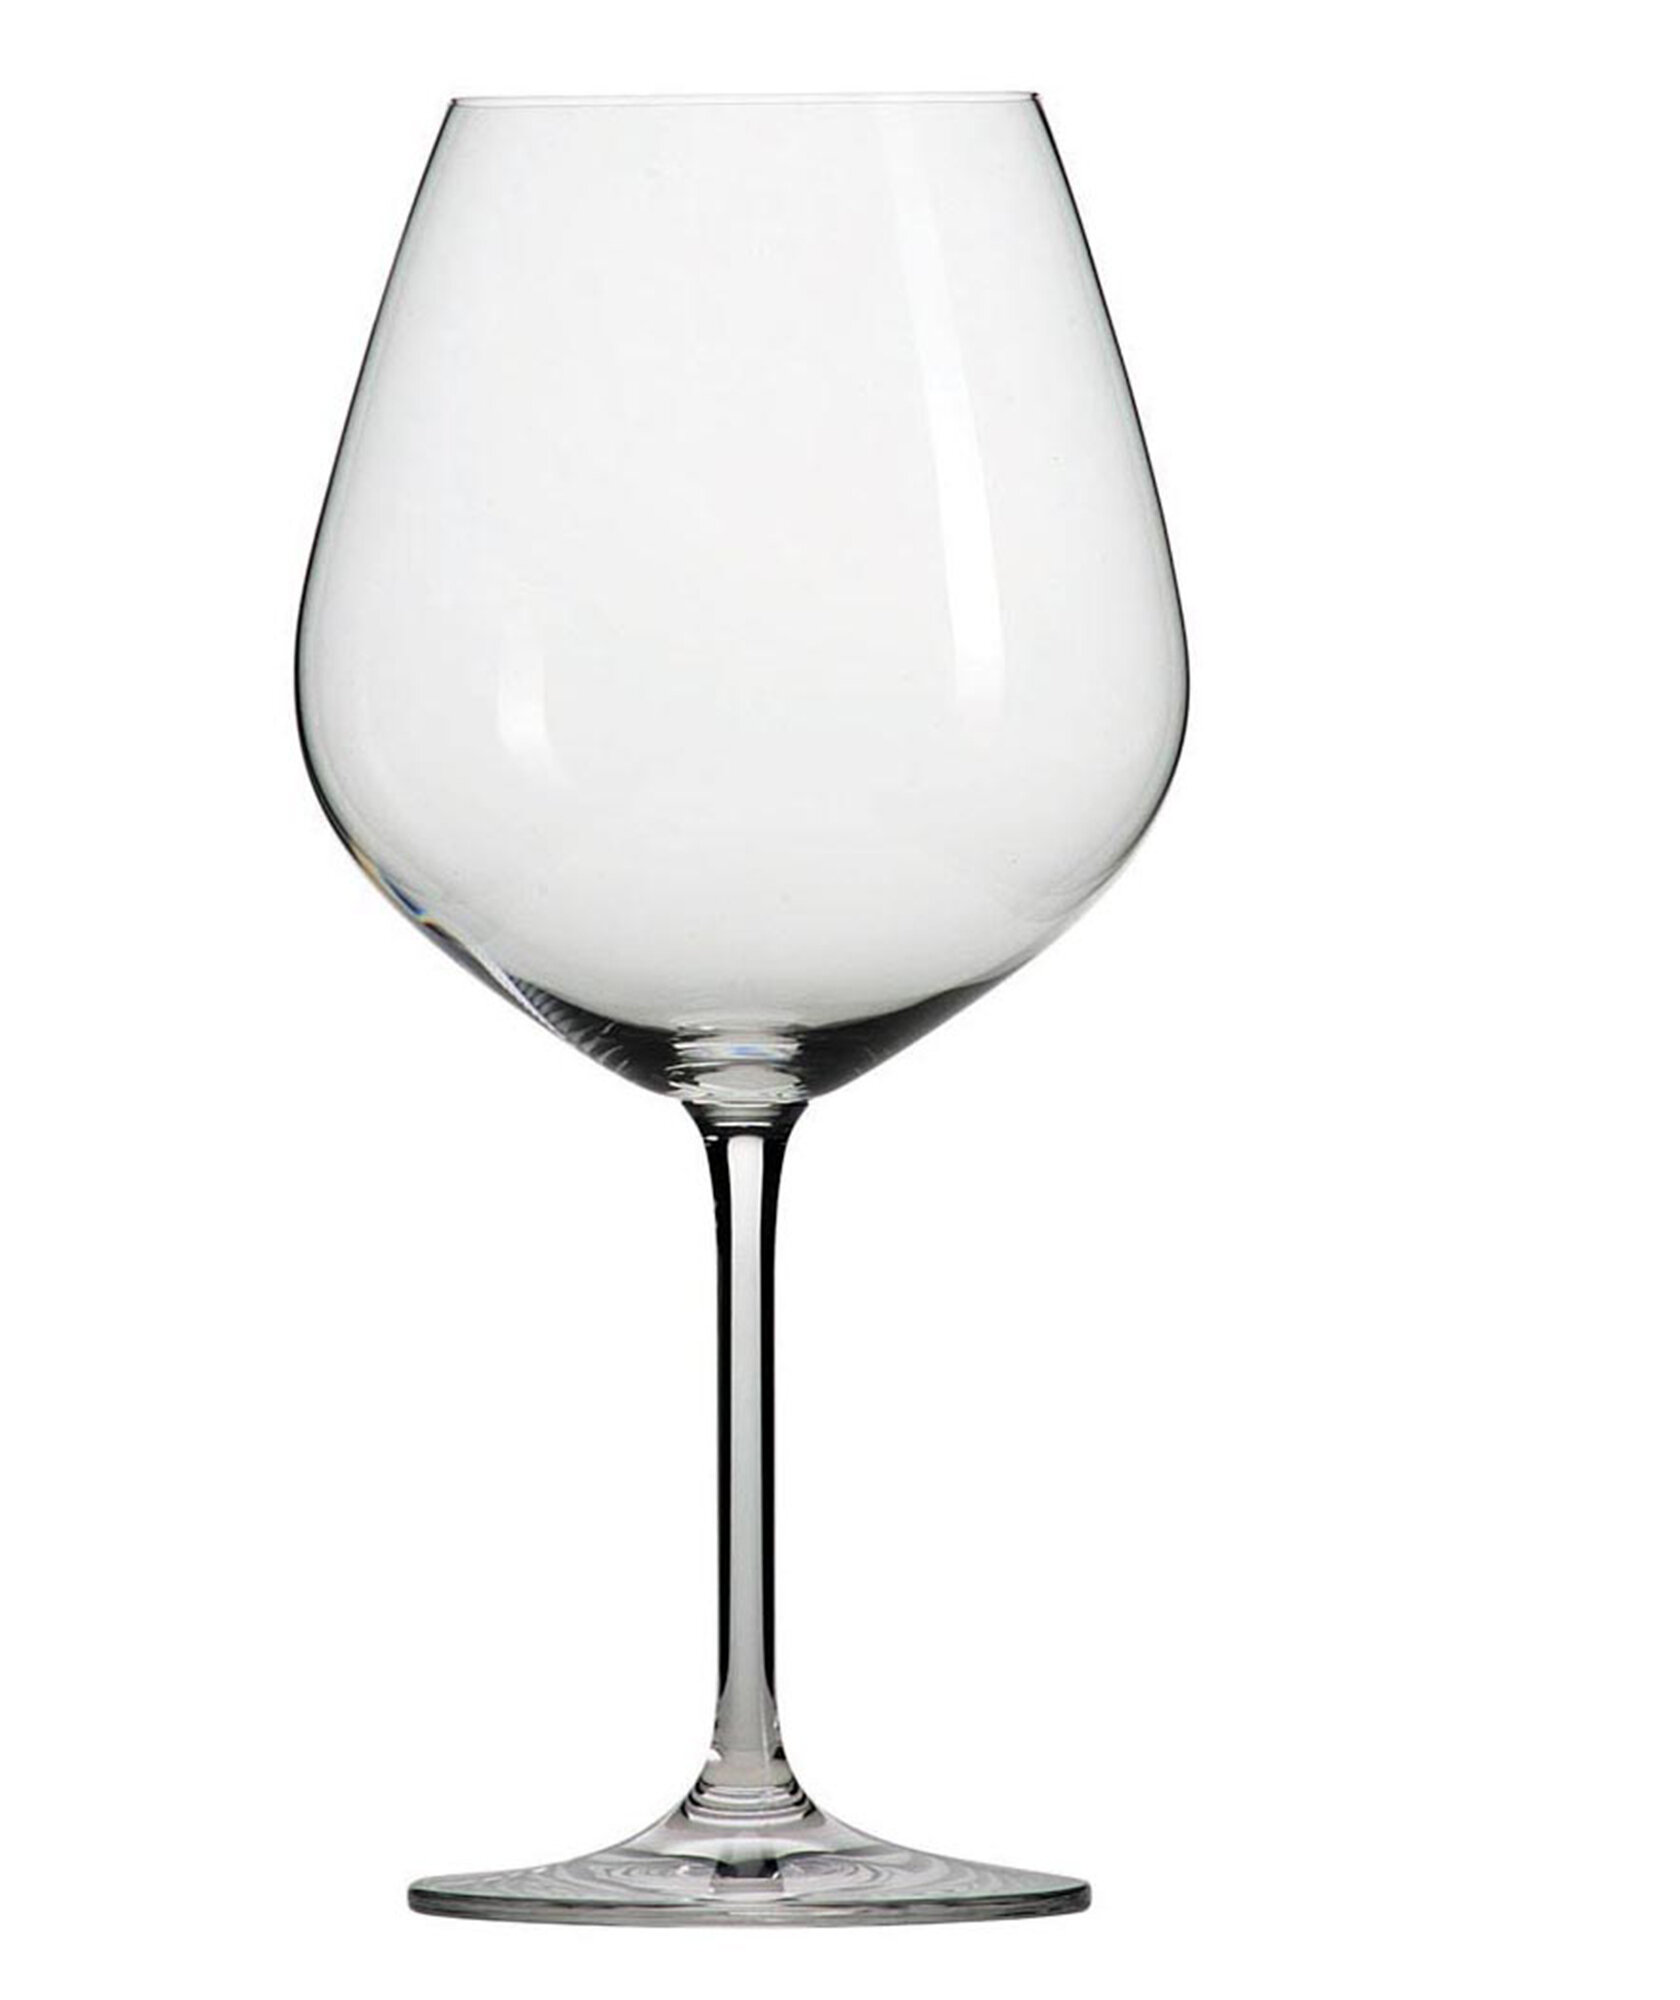 Schott Zwiesel Forte Red Wine Glasses 8 Piece Set by World Market